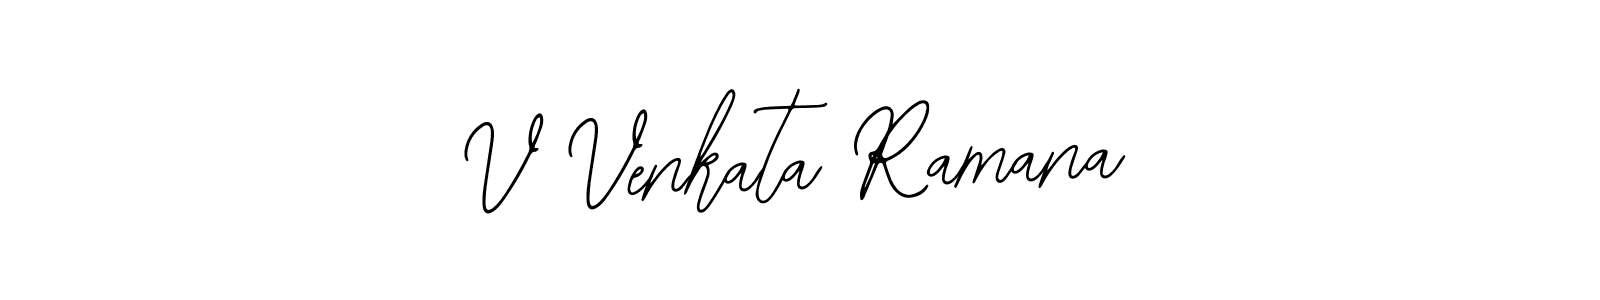 How to make V Venkata Ramana signature? Bearetta-2O07w is a professional autograph style. Create handwritten signature for V Venkata Ramana name. V Venkata Ramana signature style 12 images and pictures png